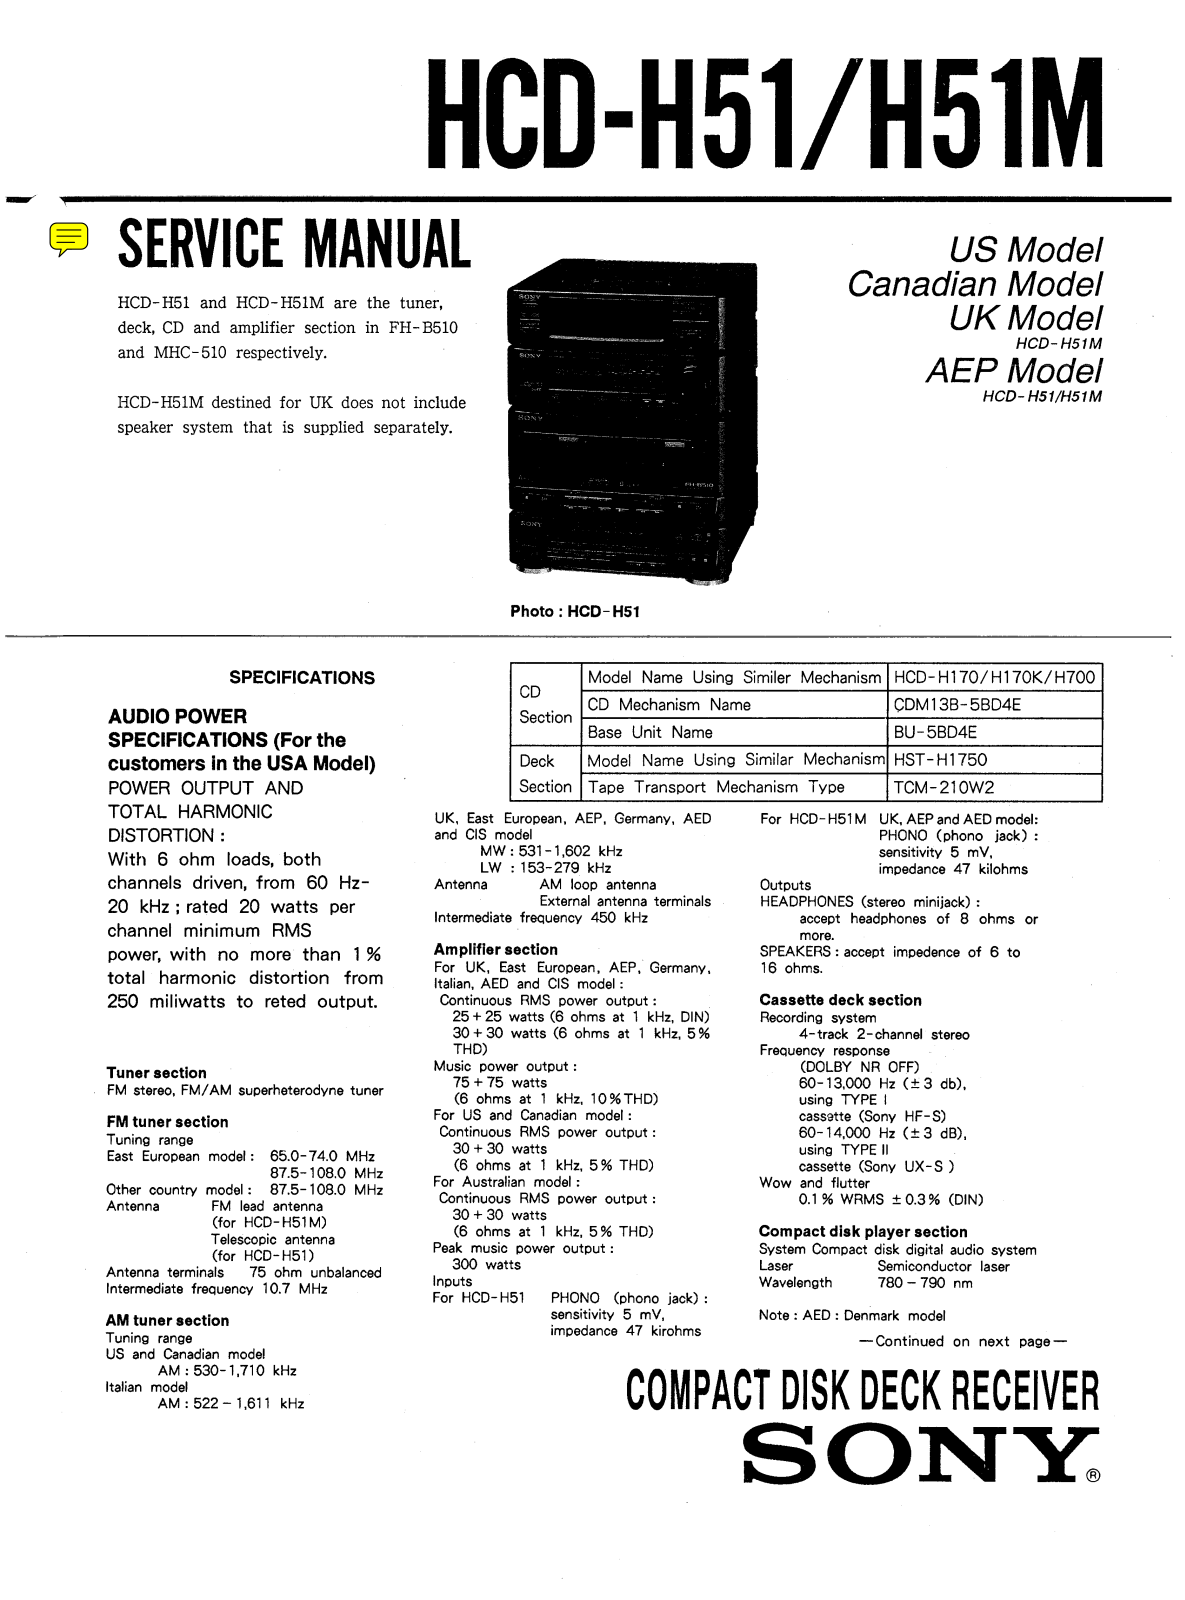 Sony HCD H51M, HCD H51 Service Manual